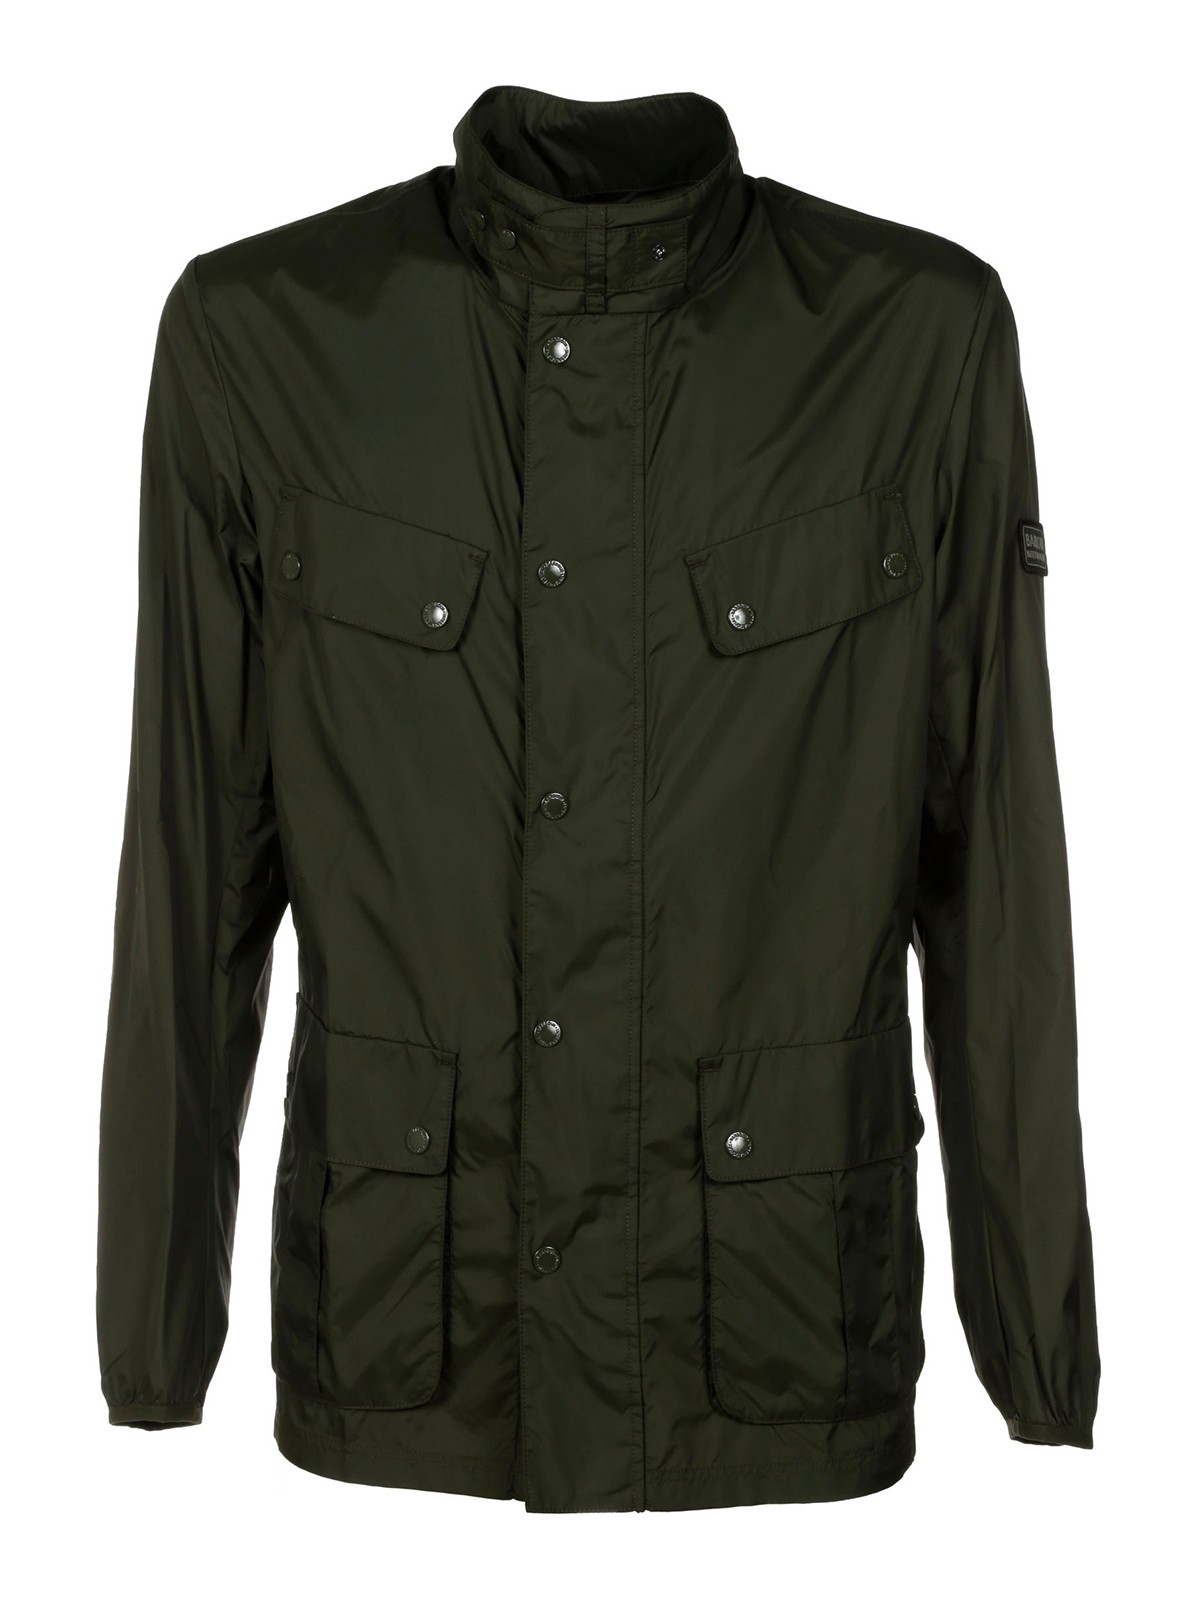 Casual jackets Barbour - Nylon field jacket - MCA0703SG71 | iKRIX.com